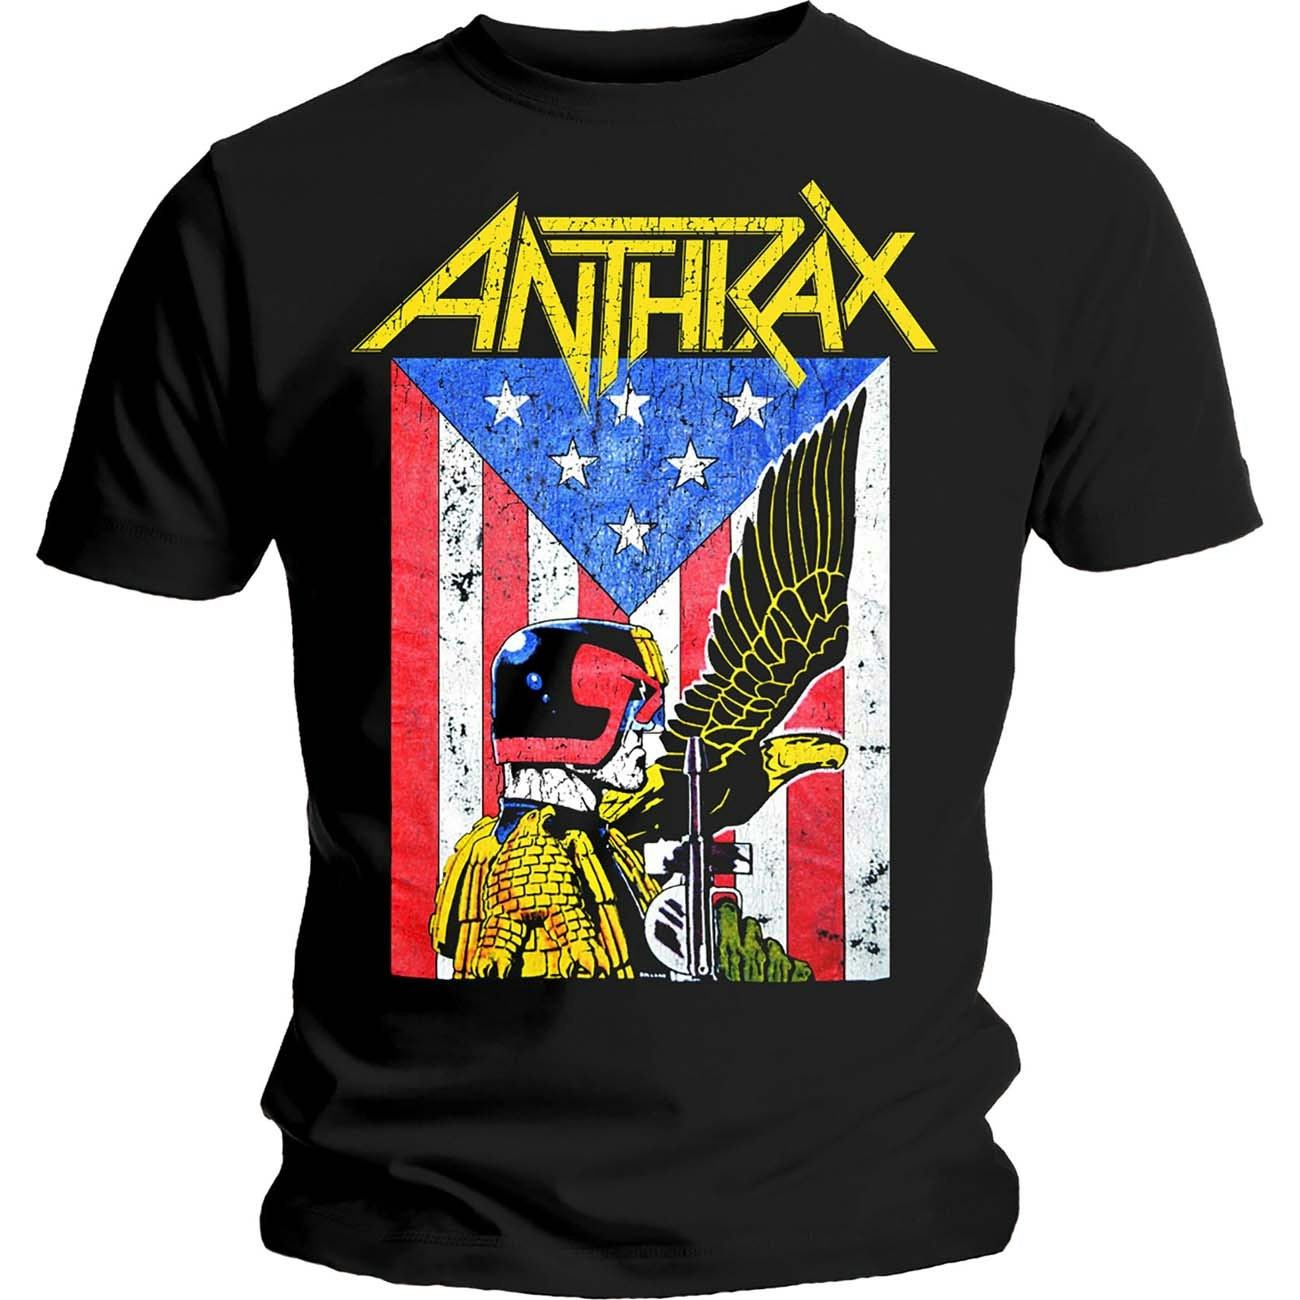 ANTHRAX: Dredd Eagle T-shirt (black)